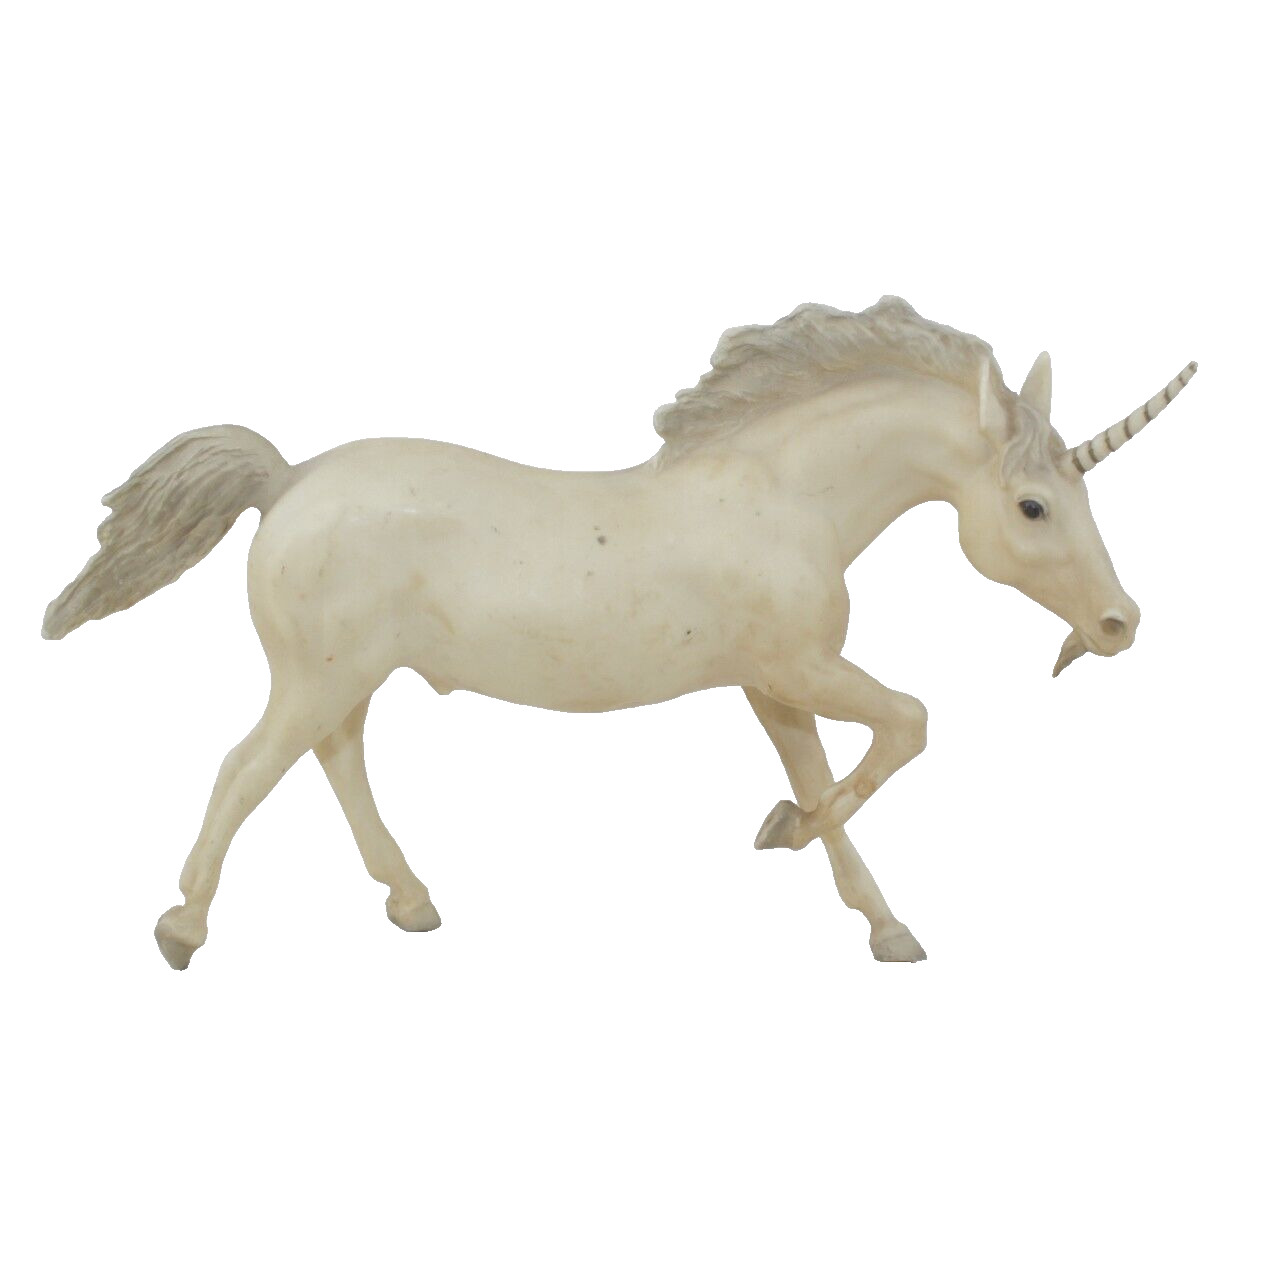 Breyer Horse #210 Alabaster Running Unicorn Stallion #700394 with Beard & Horn